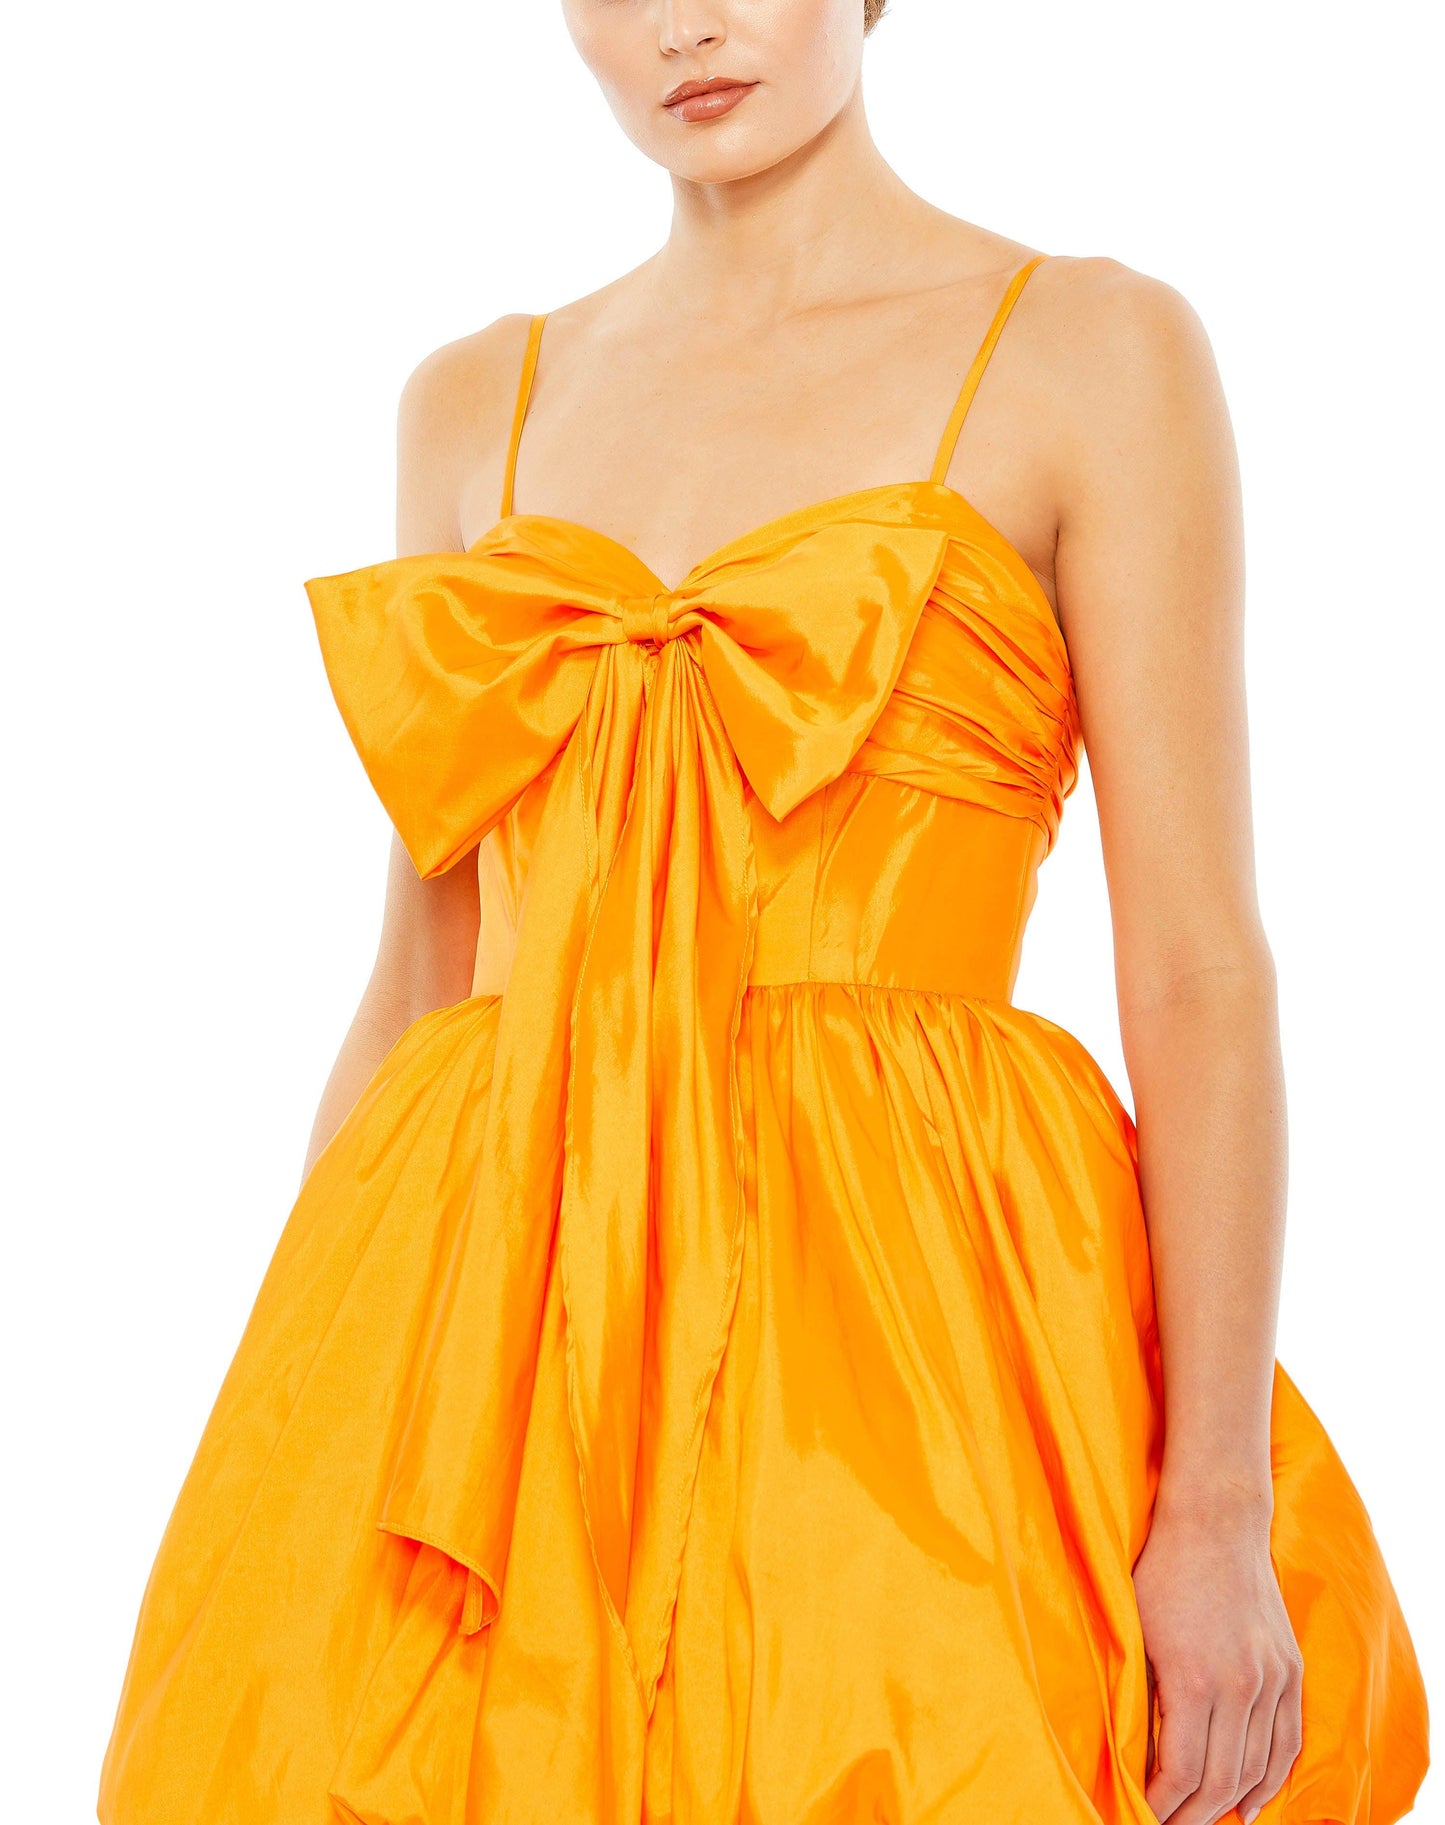 Cocktail Dresses Short Spaghetti Strap Mini Cocktail Dress Orange